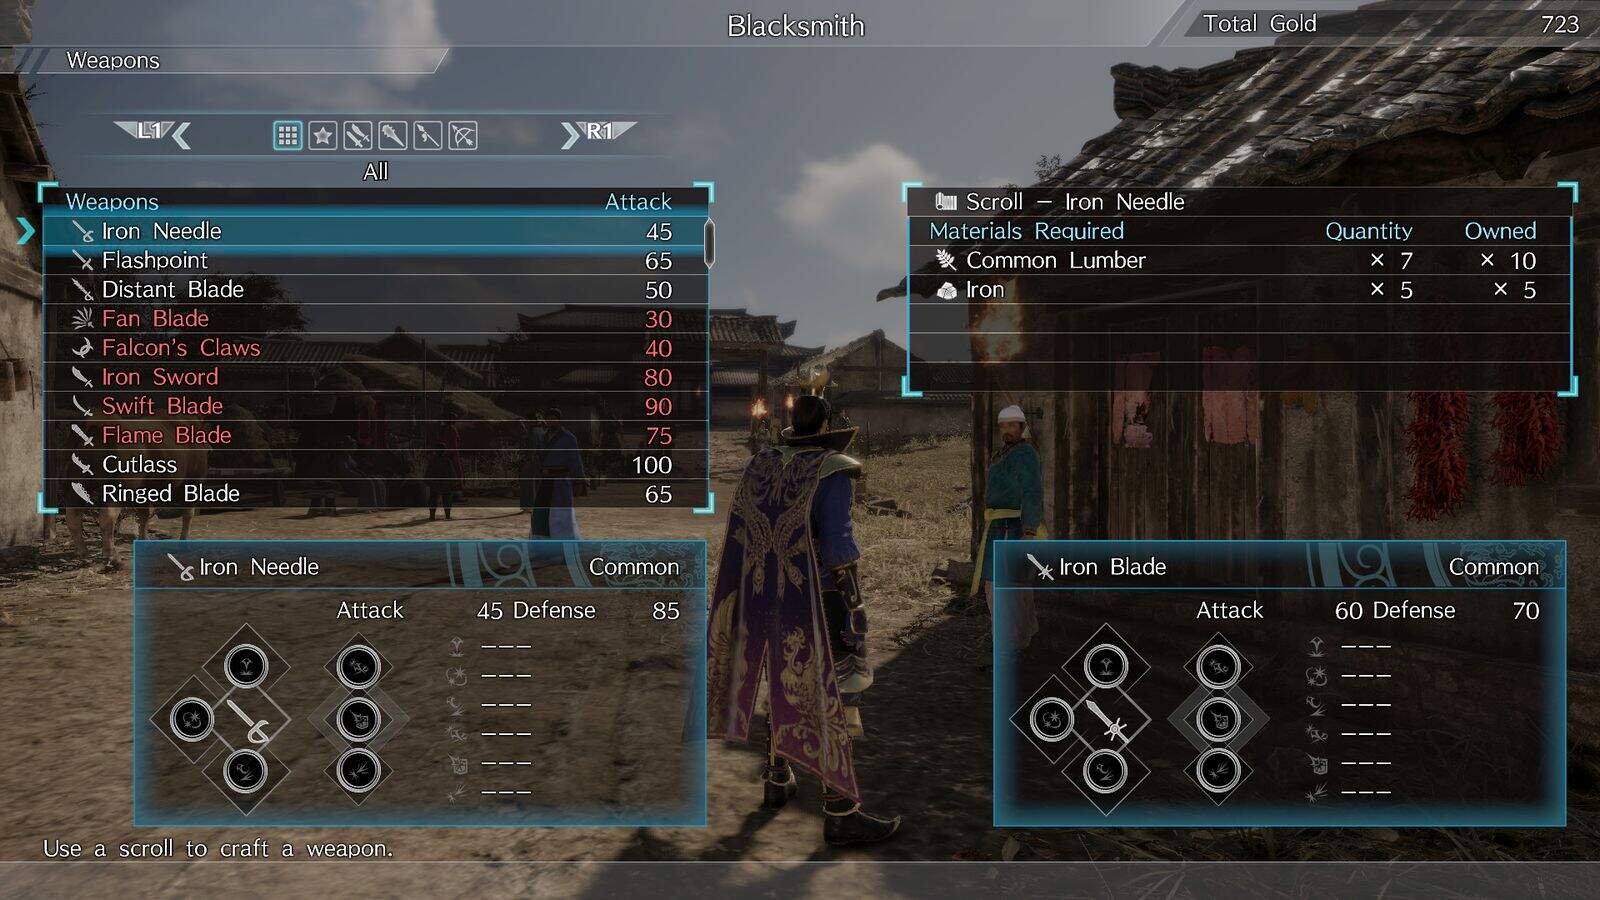 Dynasty Warriors 9 Screenshot 11